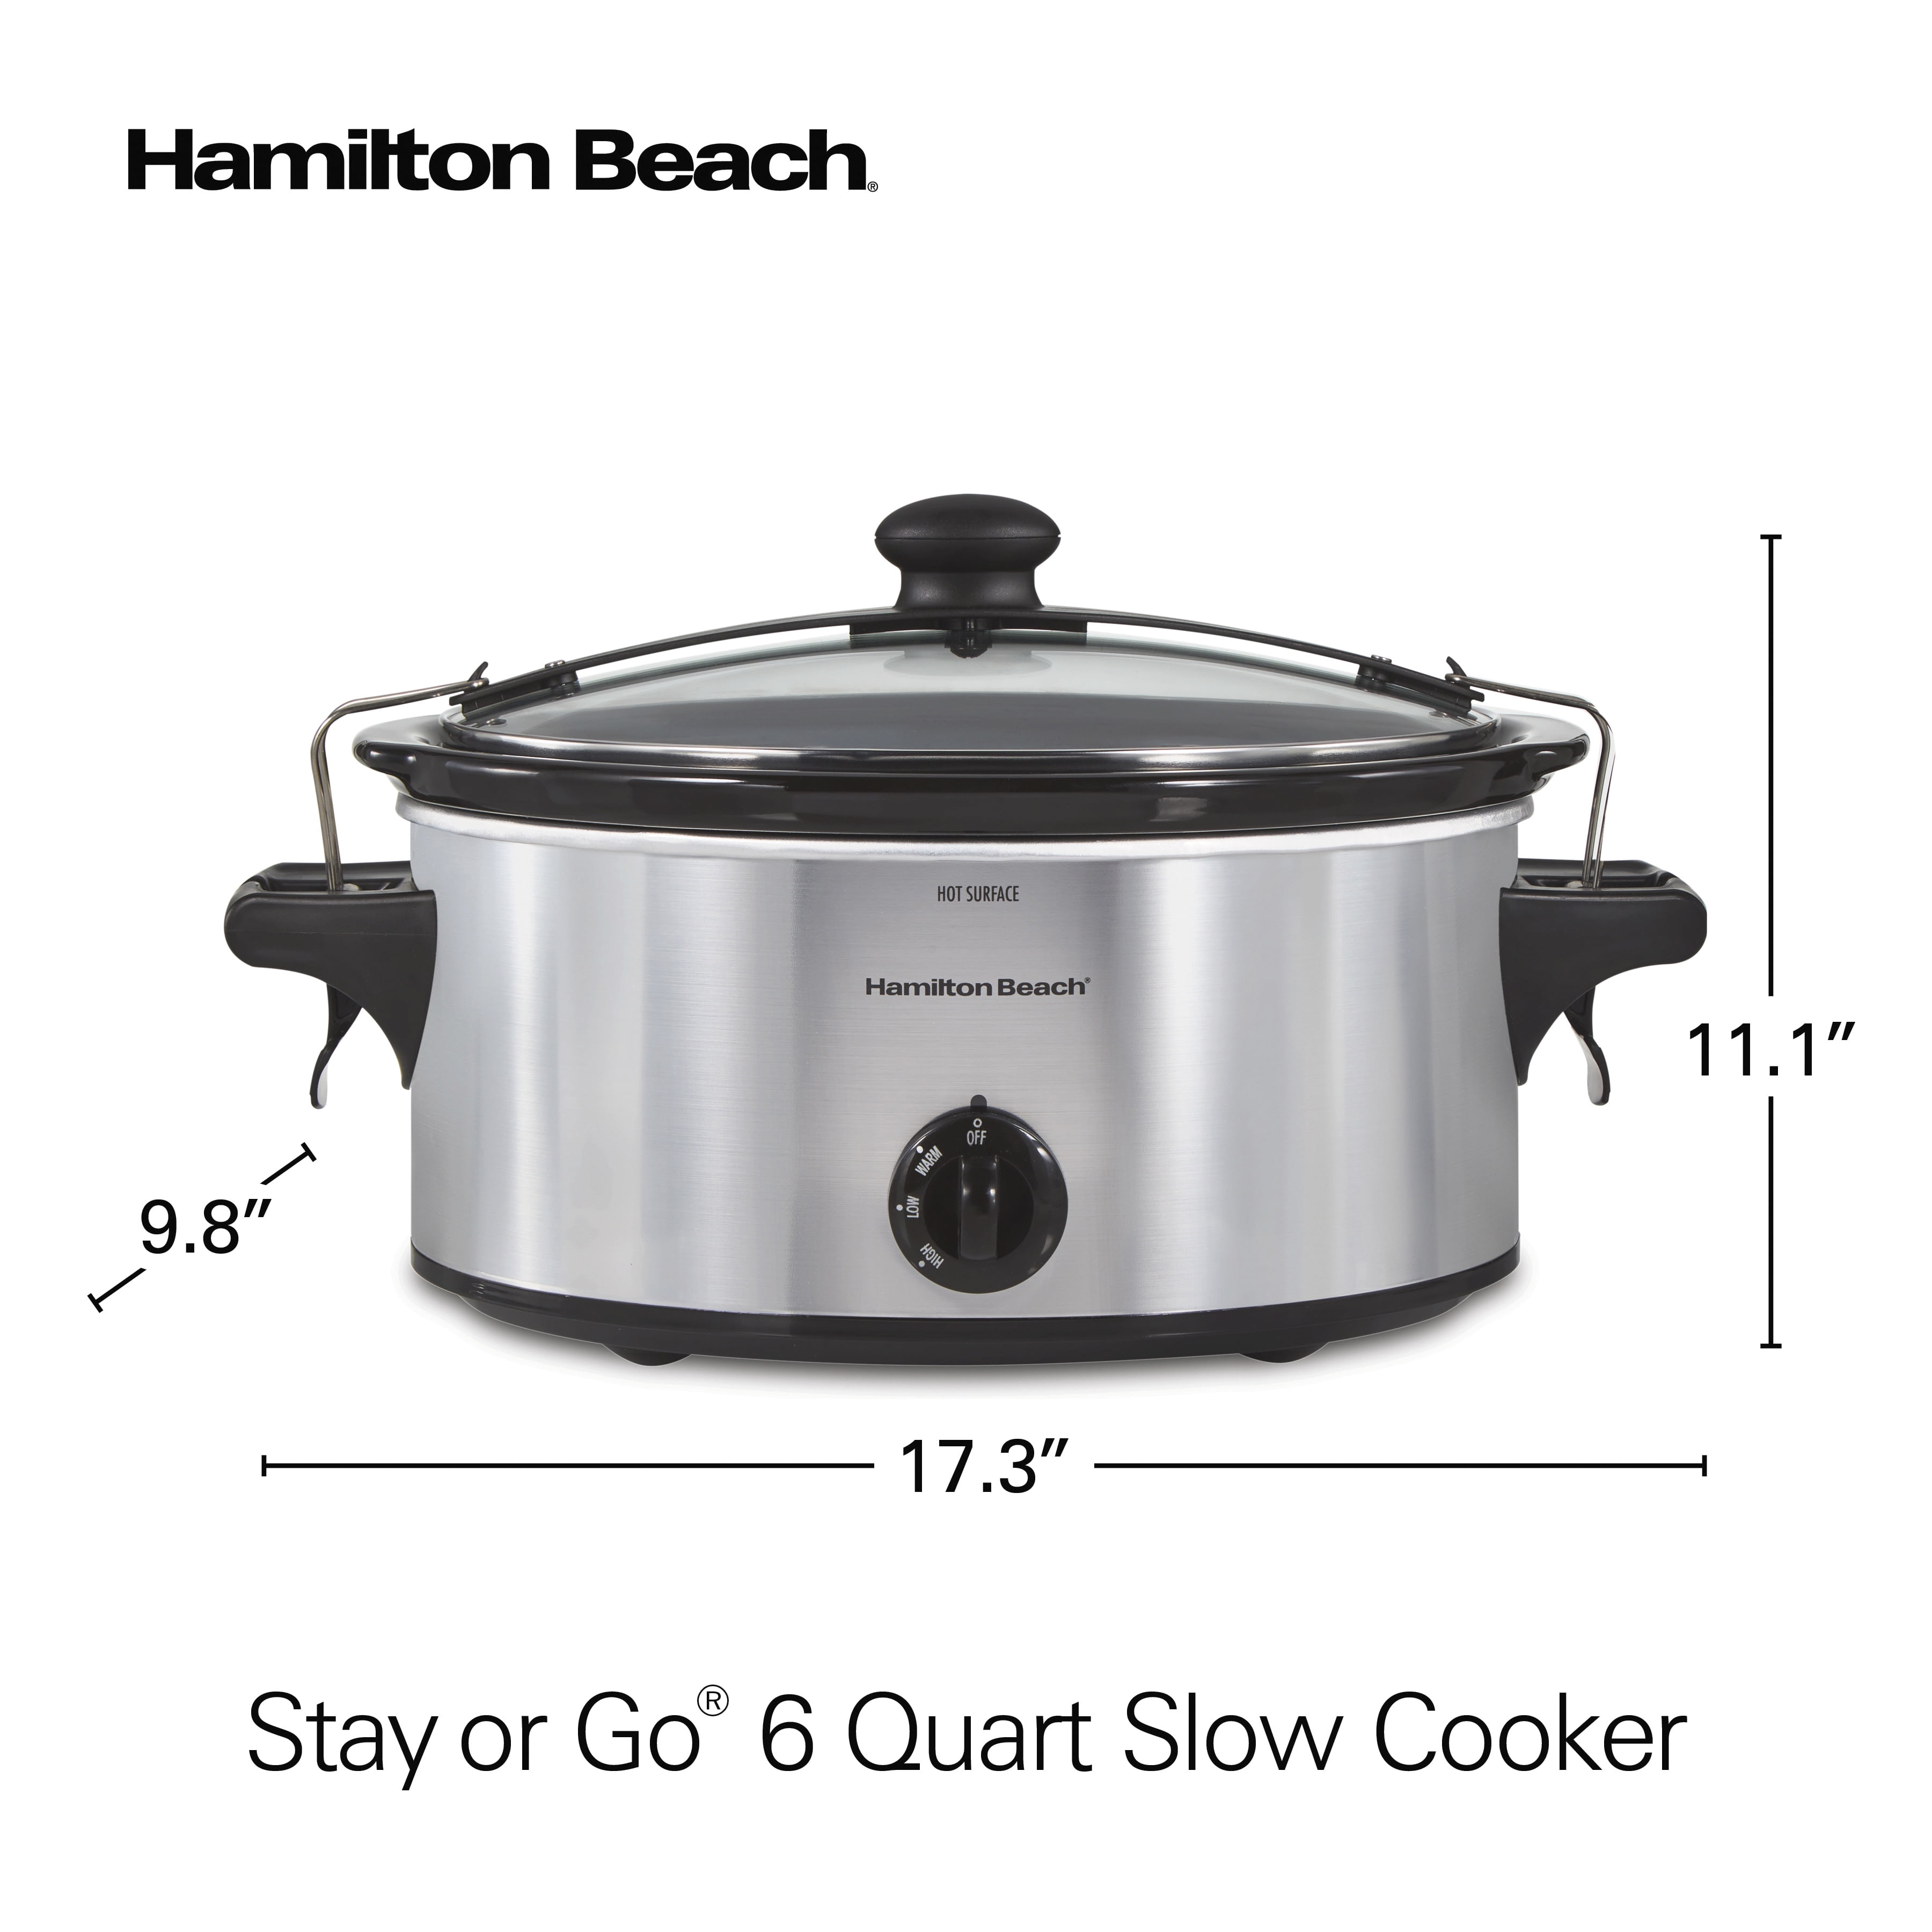 Hamilton Beach Stay or Go 6-Quart Slow Cooker Model 33268